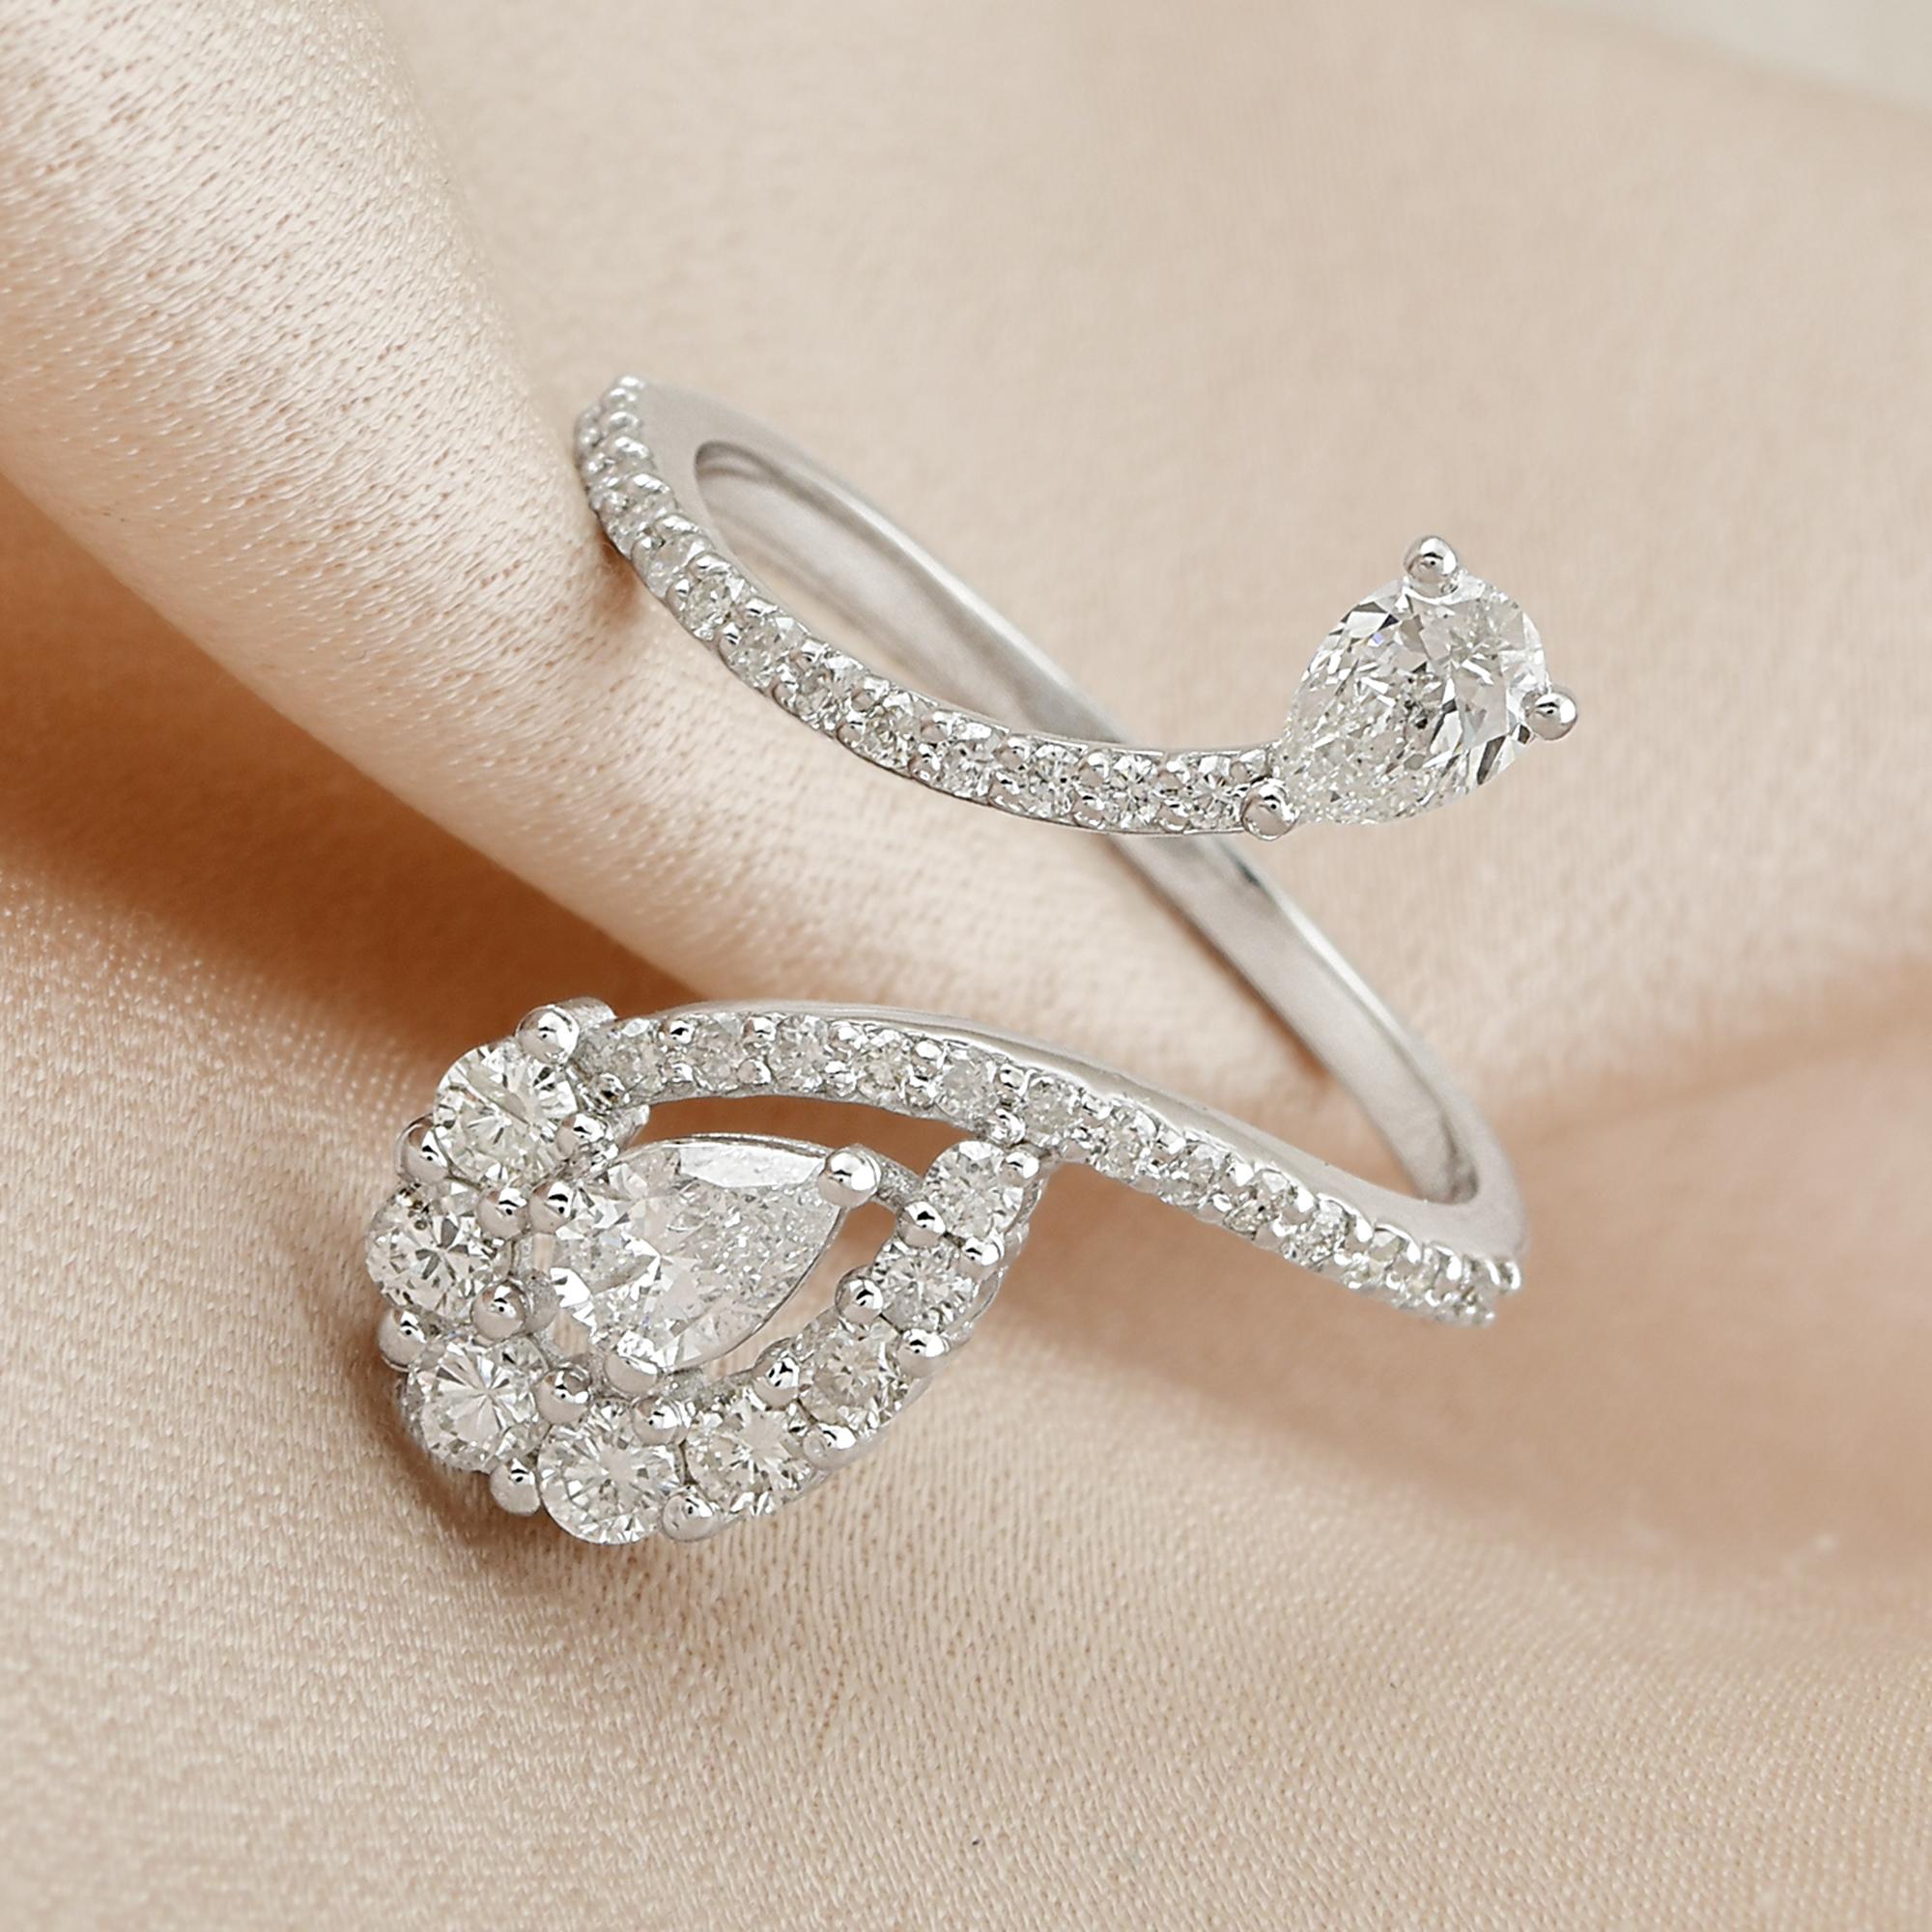 Taille poire 0.8 Carat SI Clarity HI Color Pear Diamond Wrap Ring 14 Karat White Gold Jewelry en vente